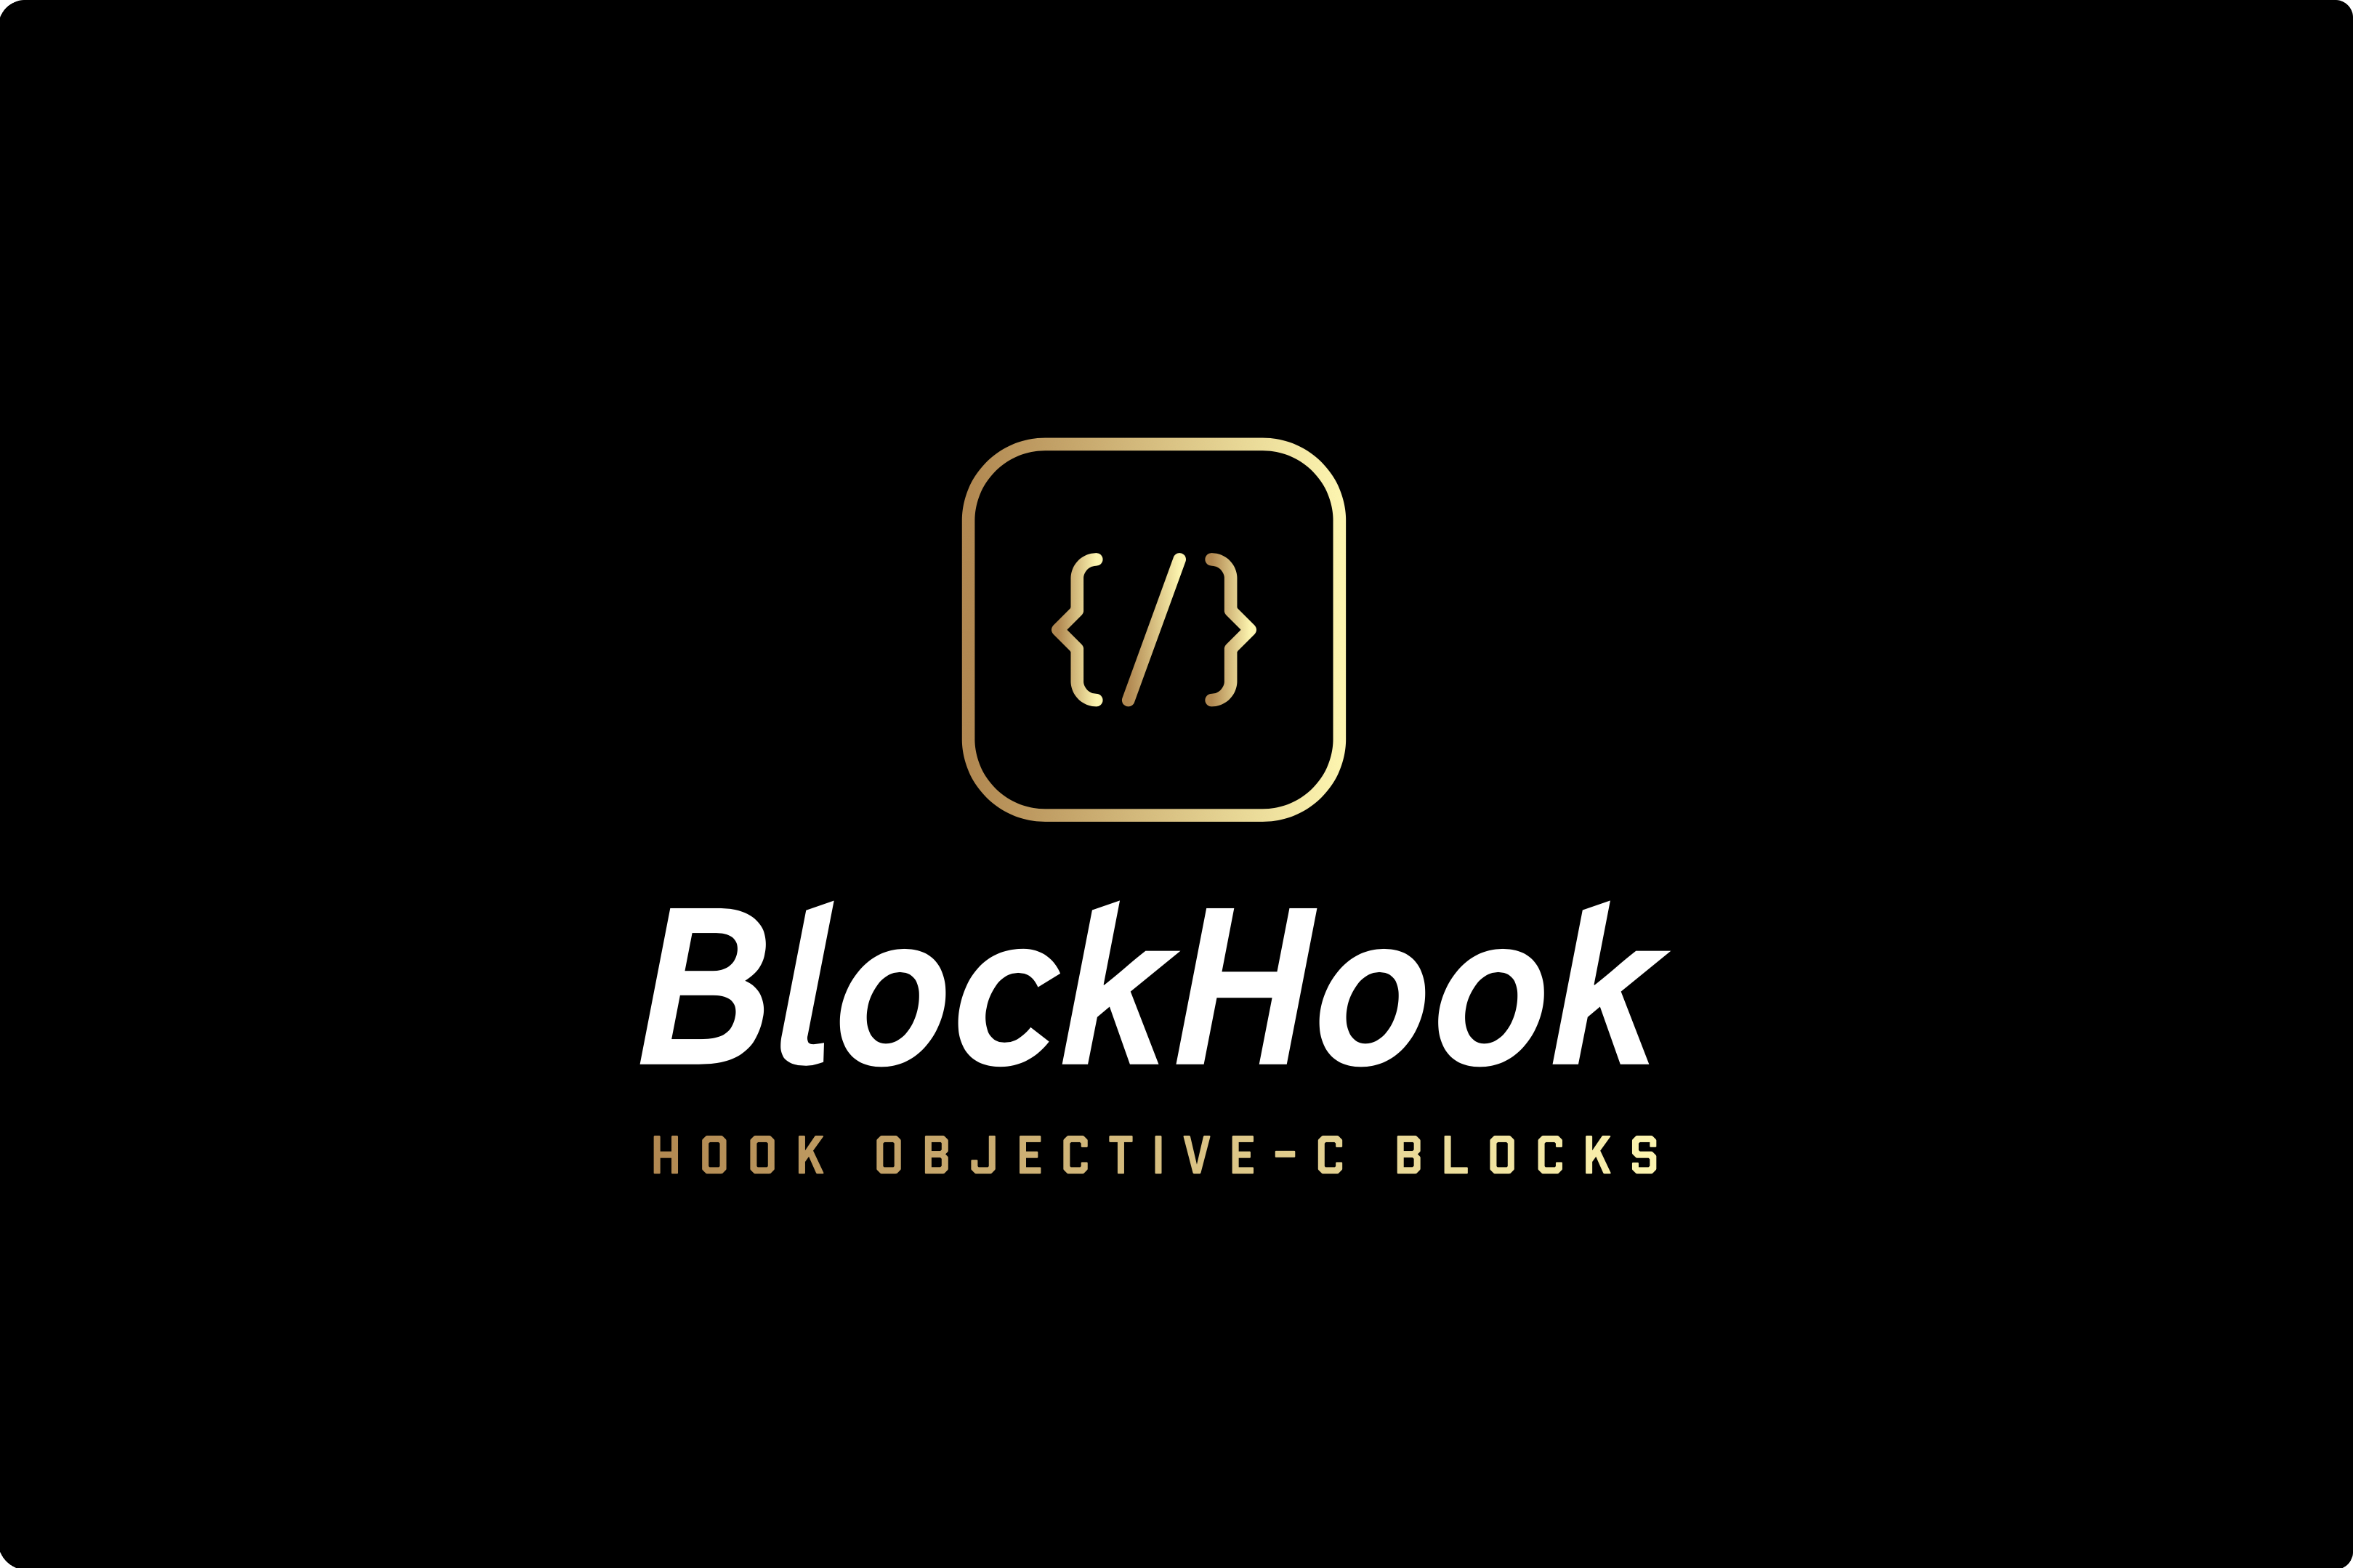 BlockHook